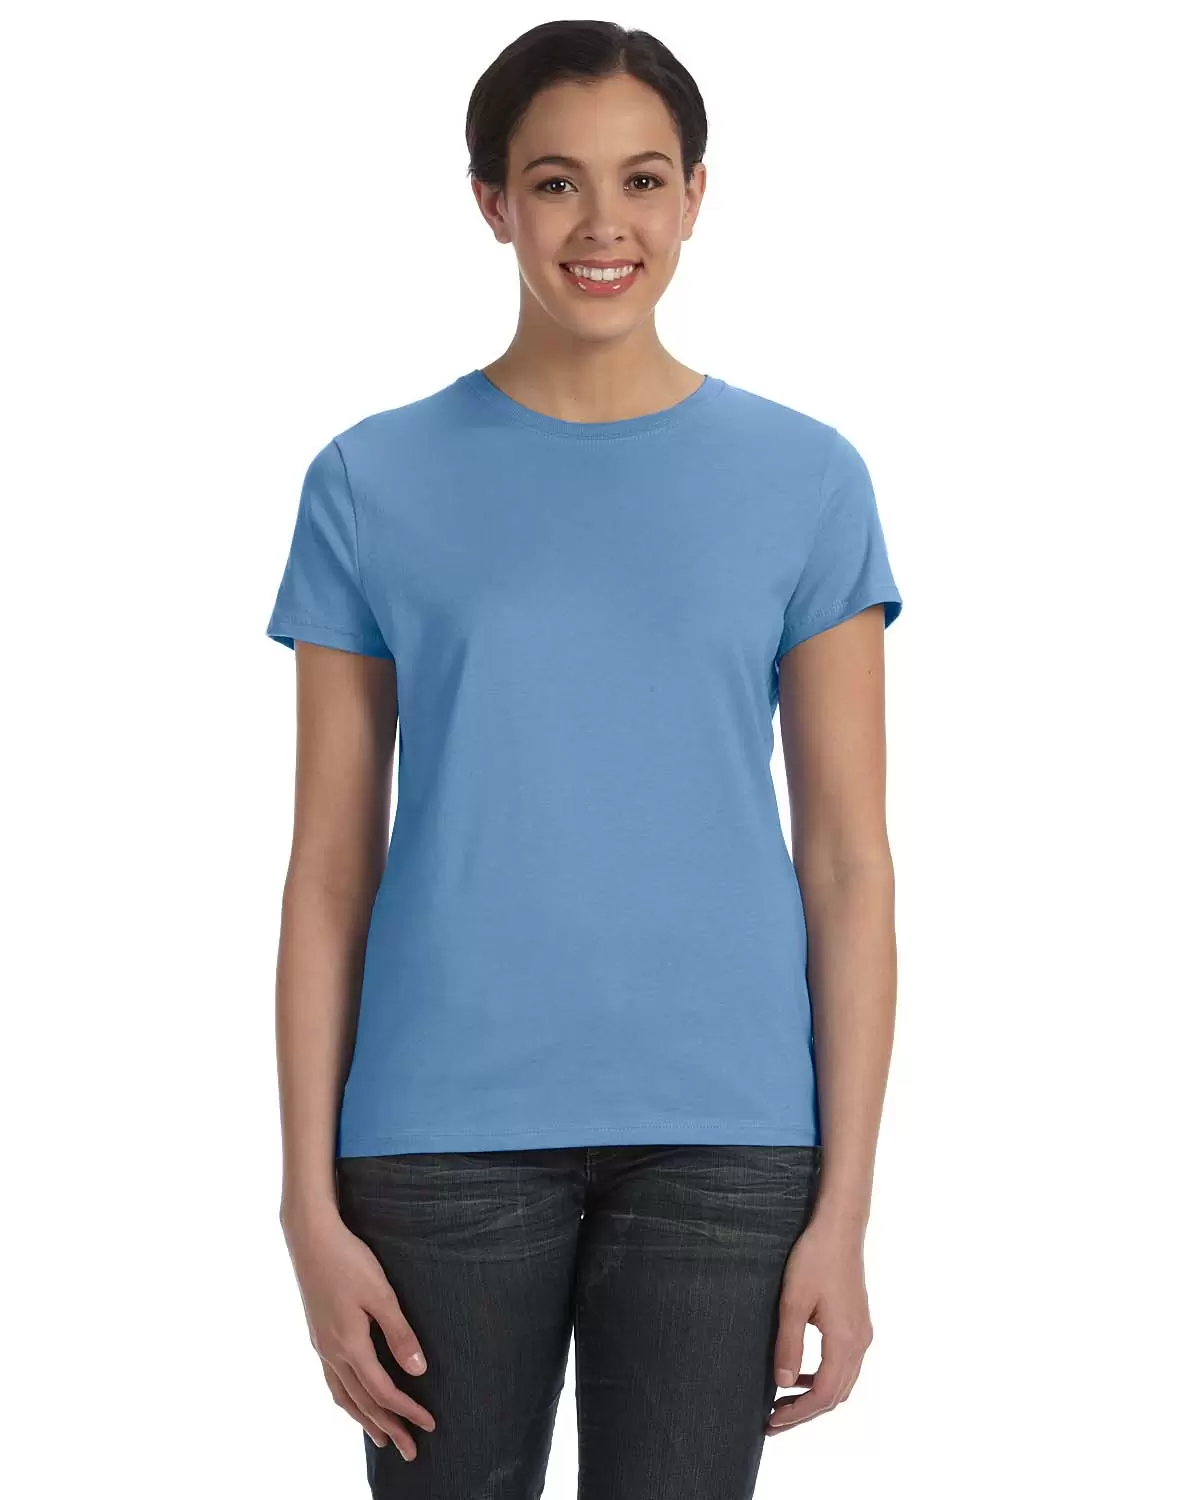 Hanes Ladies Nano T Cotton T Shirt SL04 - From $2.53